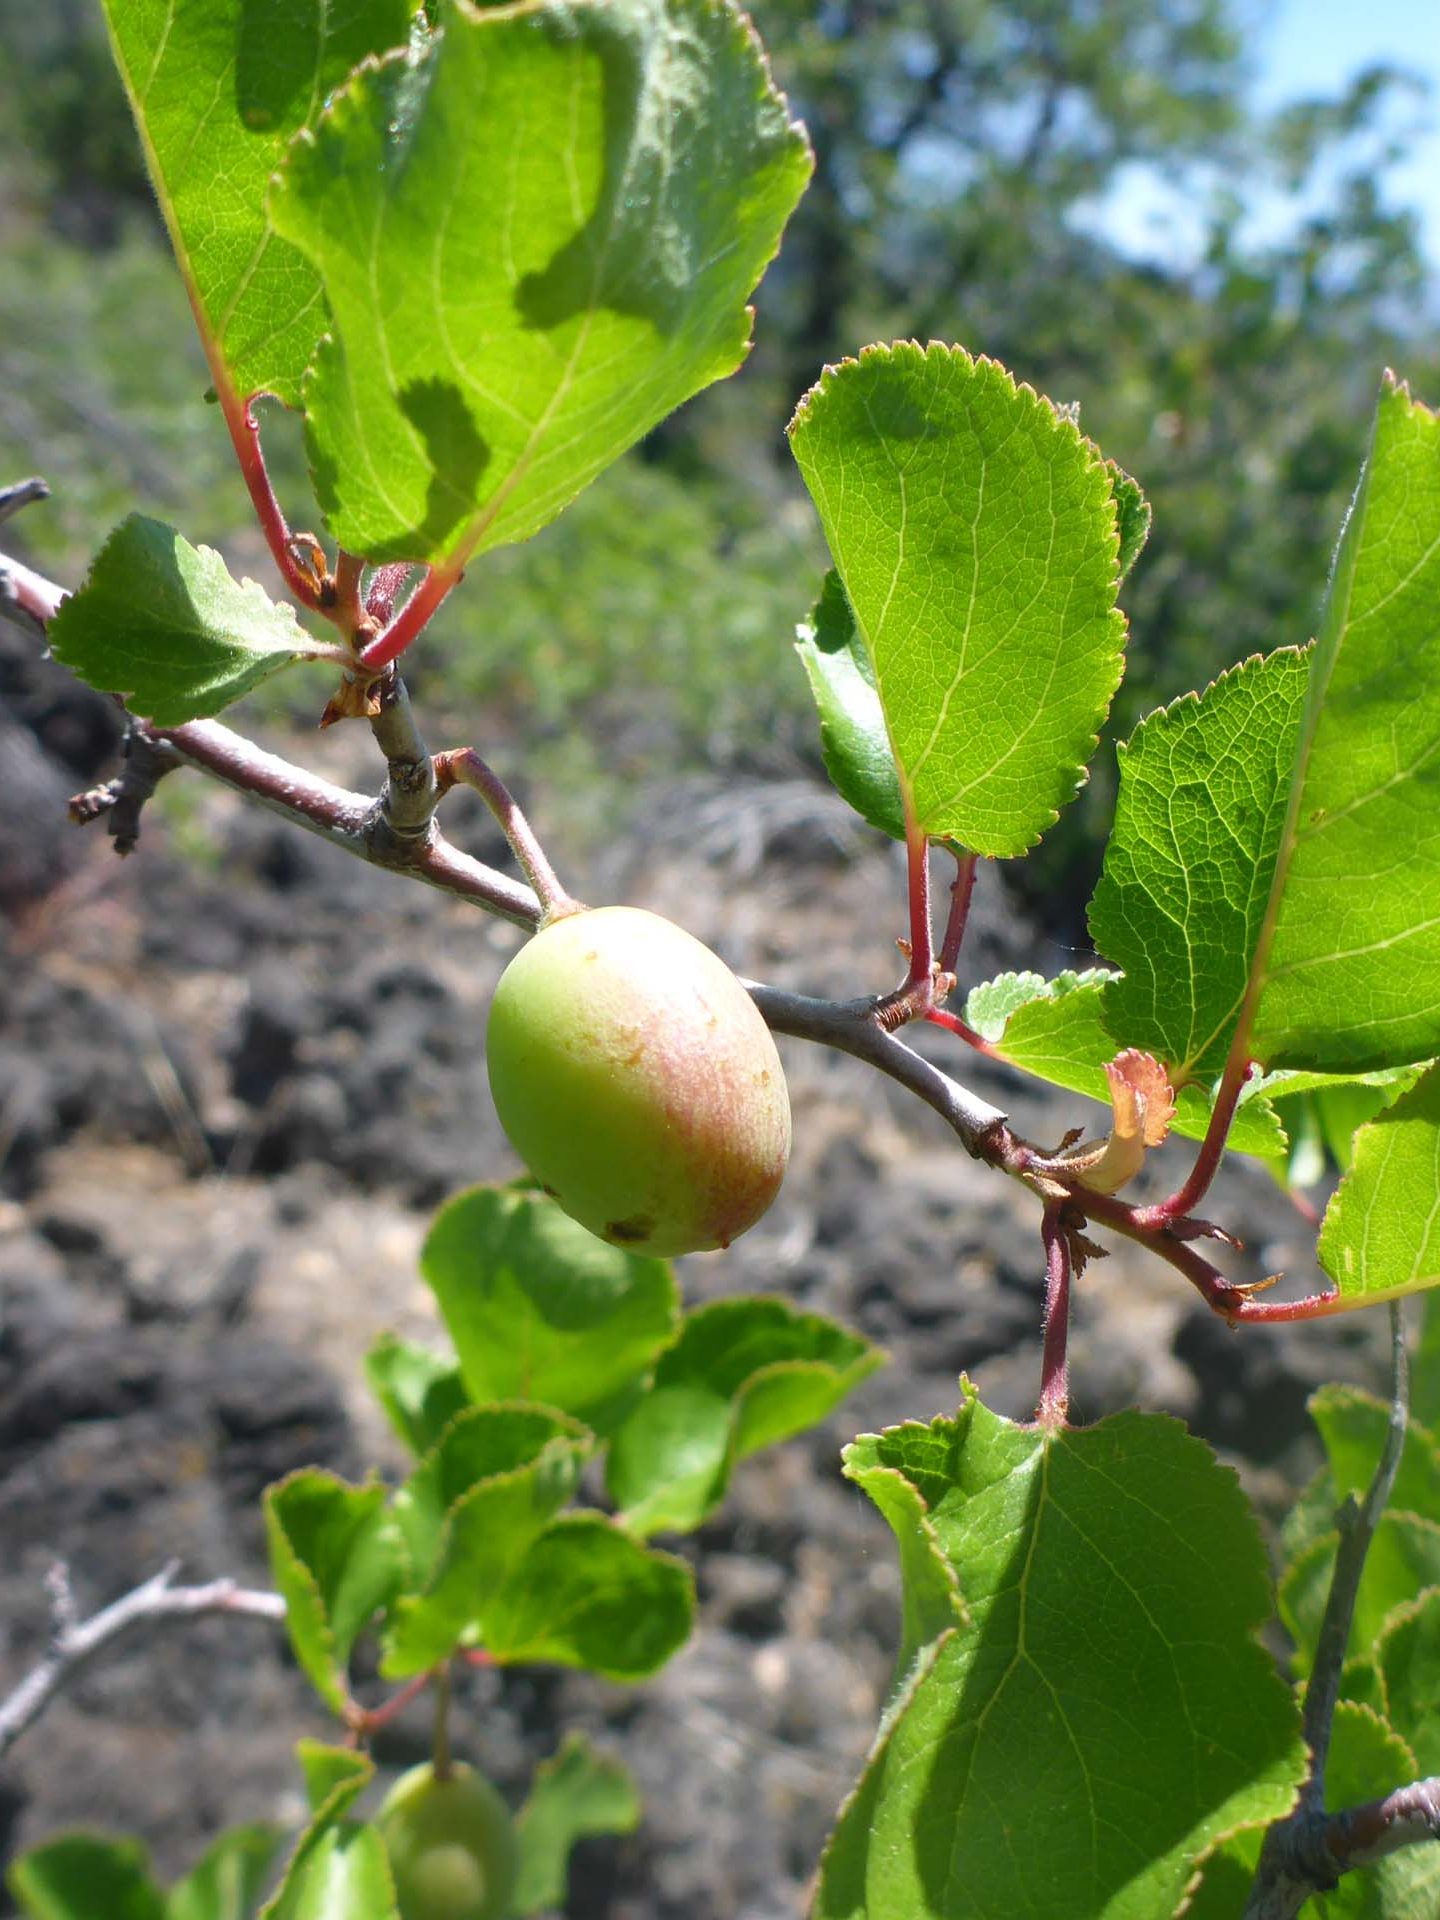 Sierra plum fruit. D. Burk.